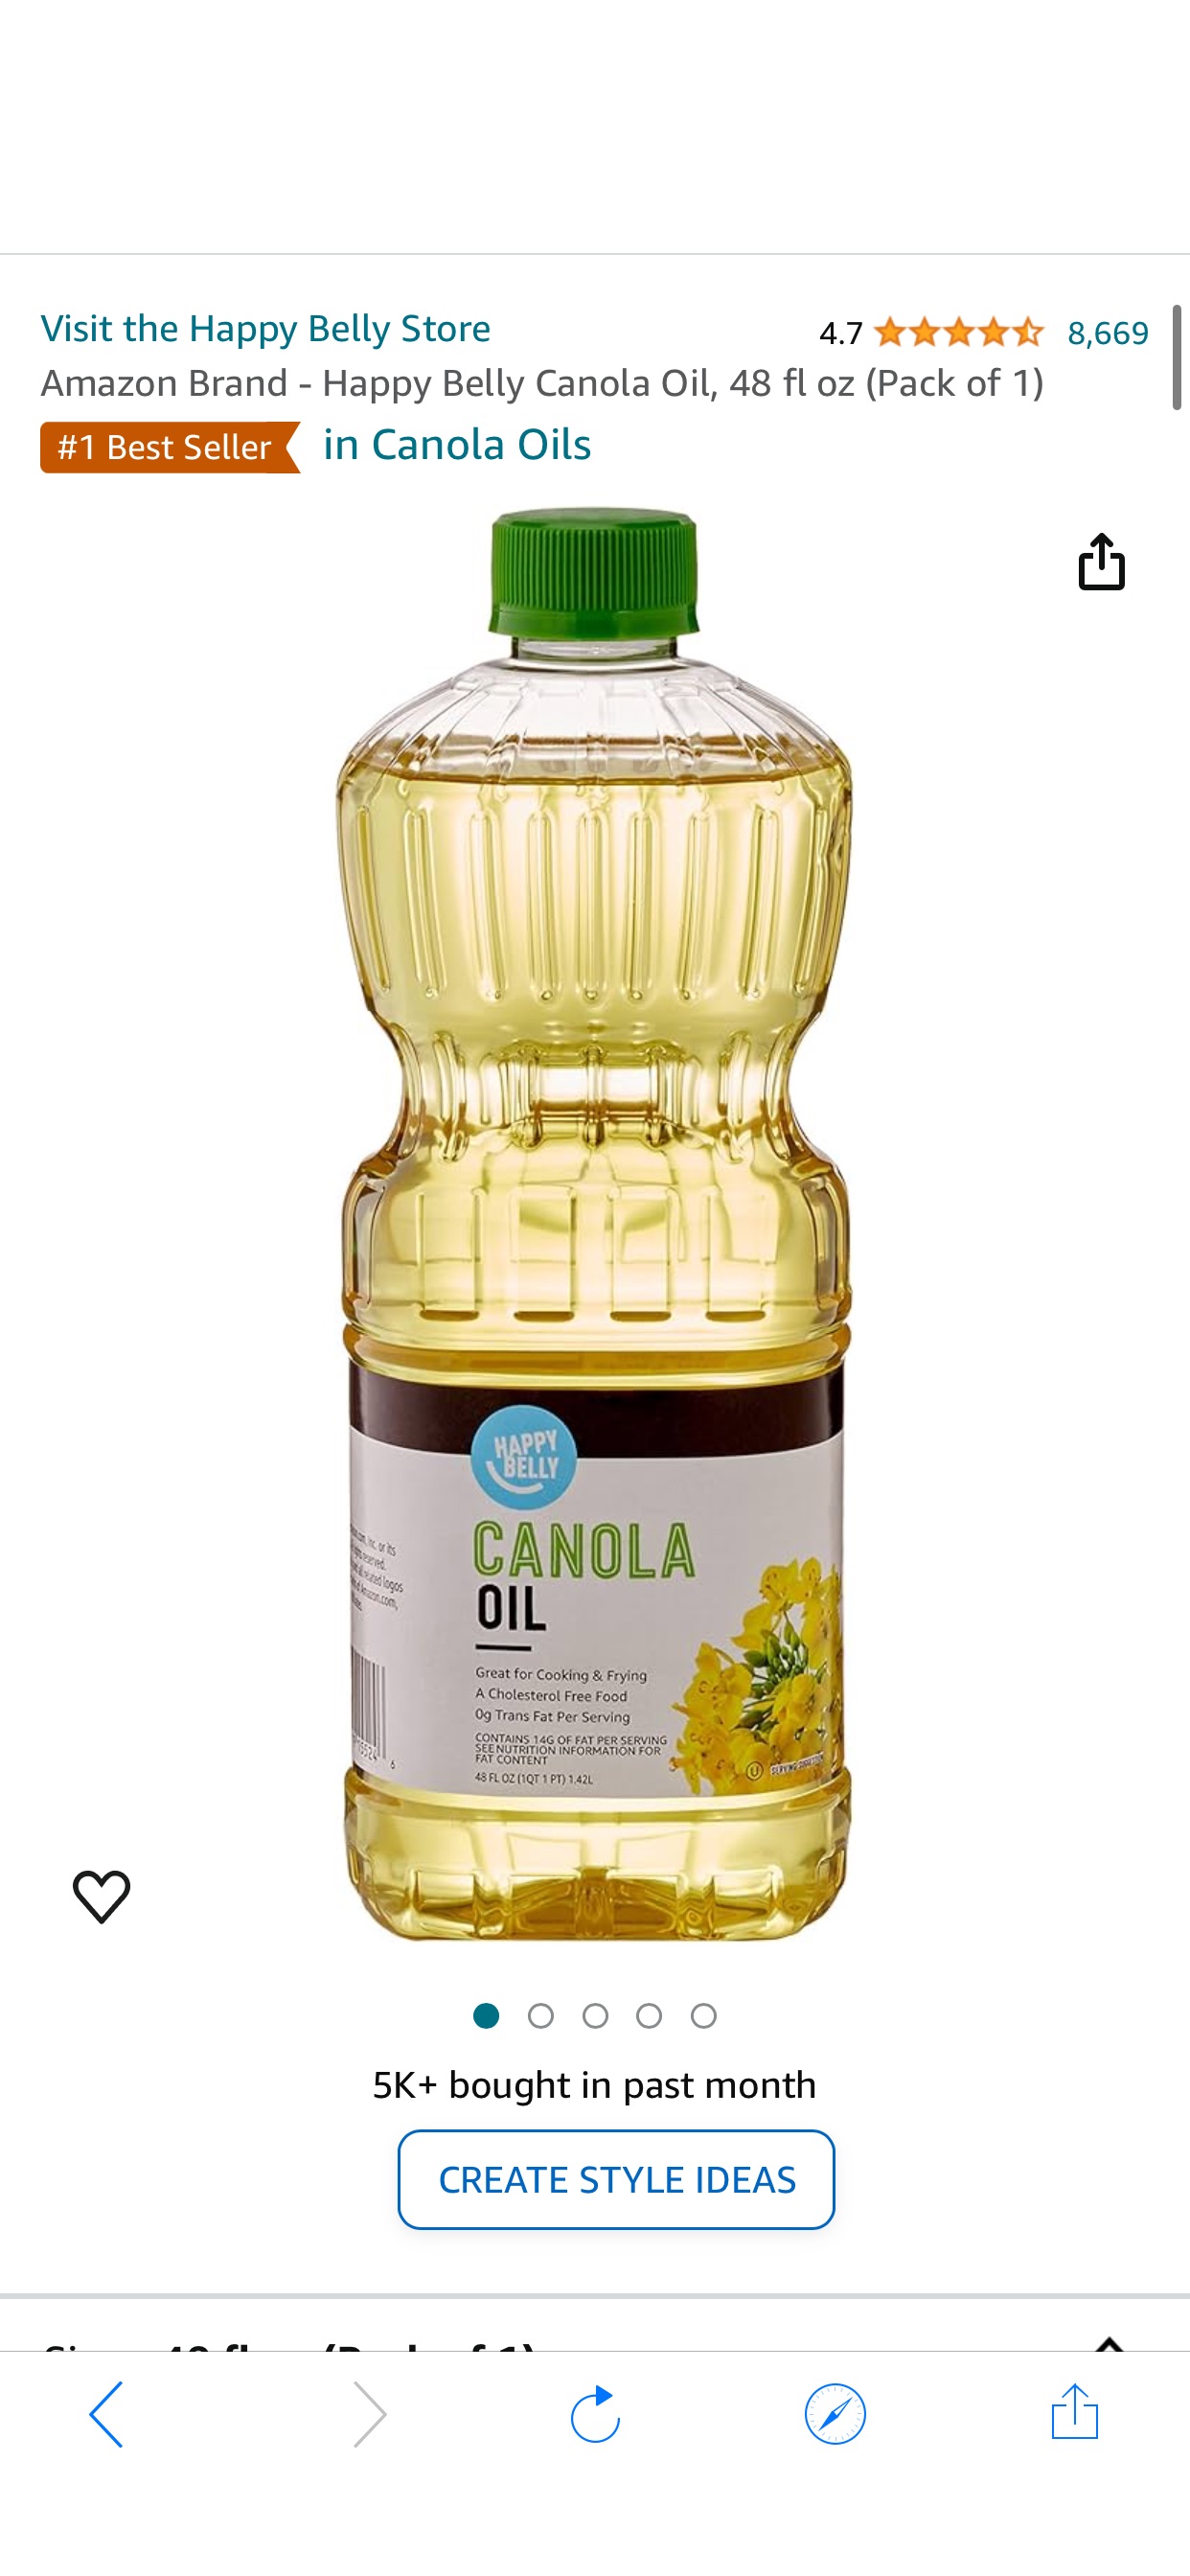 Amazon.com: Amazon Brand - Happy Belly Canola Oil, 48 fl oz (Pack of 1)菜籽油